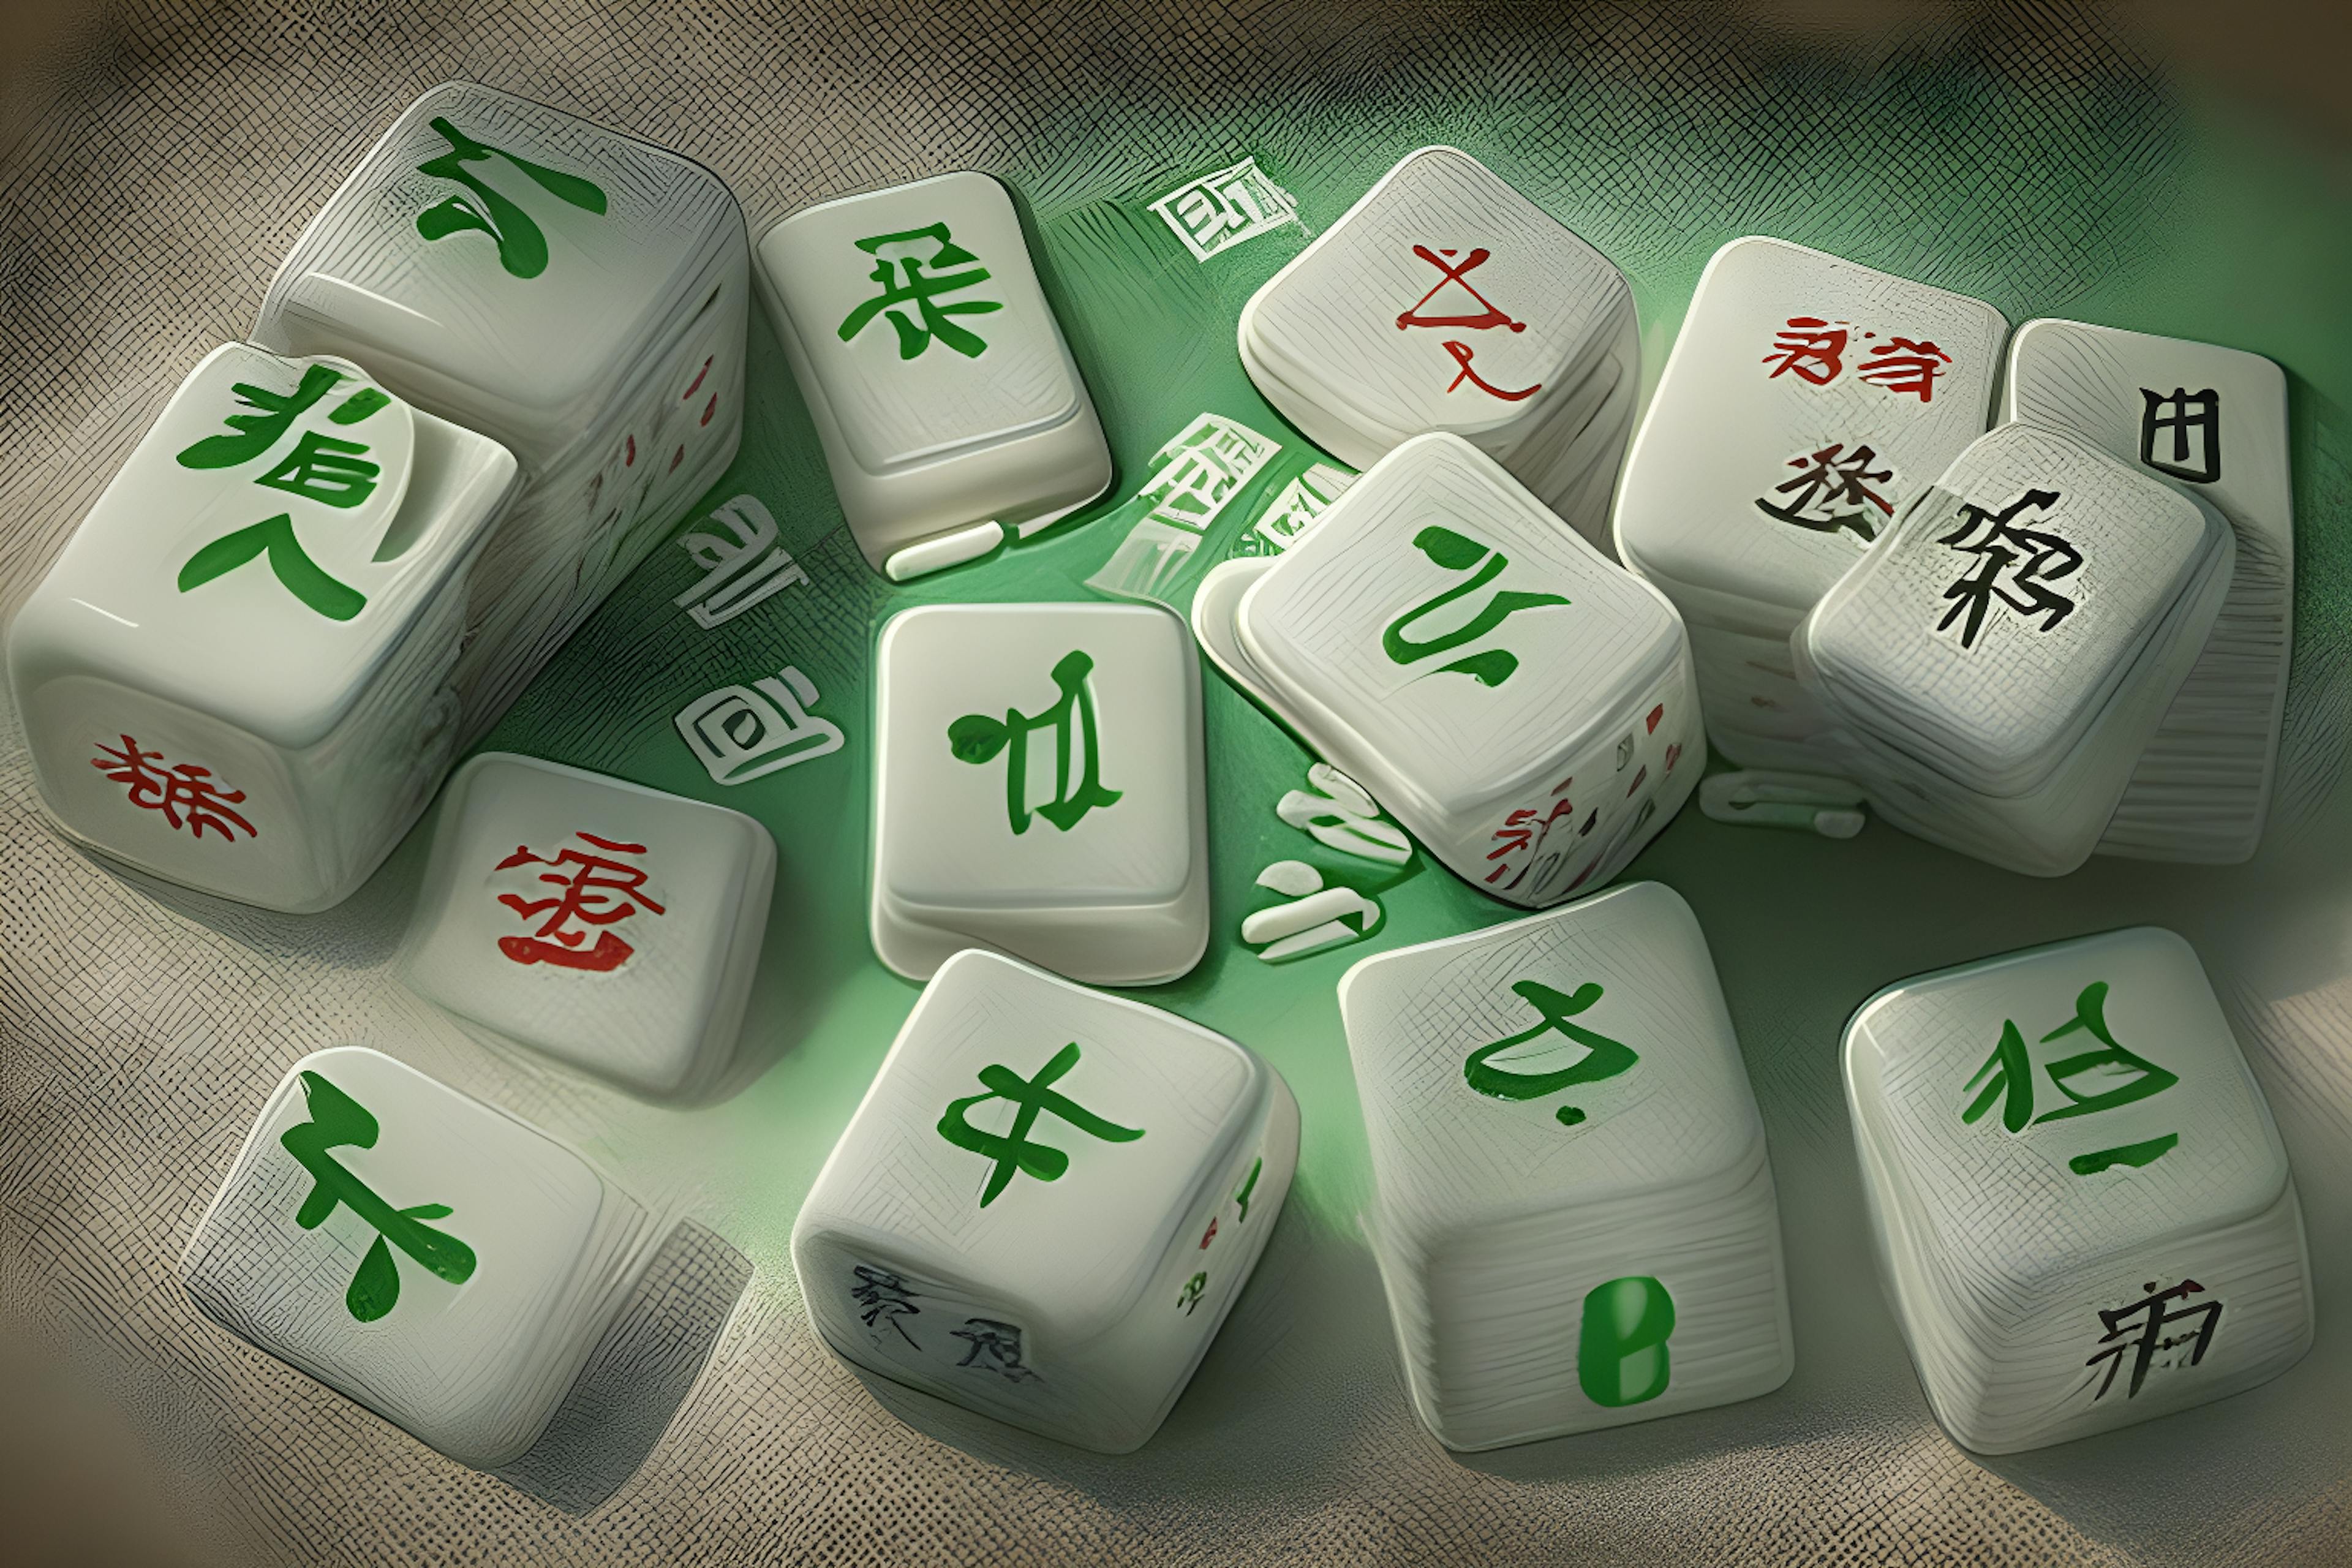 featured image - 0xMahjong NFT 开始免费铸造——Mahjong Meta Game 预计融资超过 1000 万美元